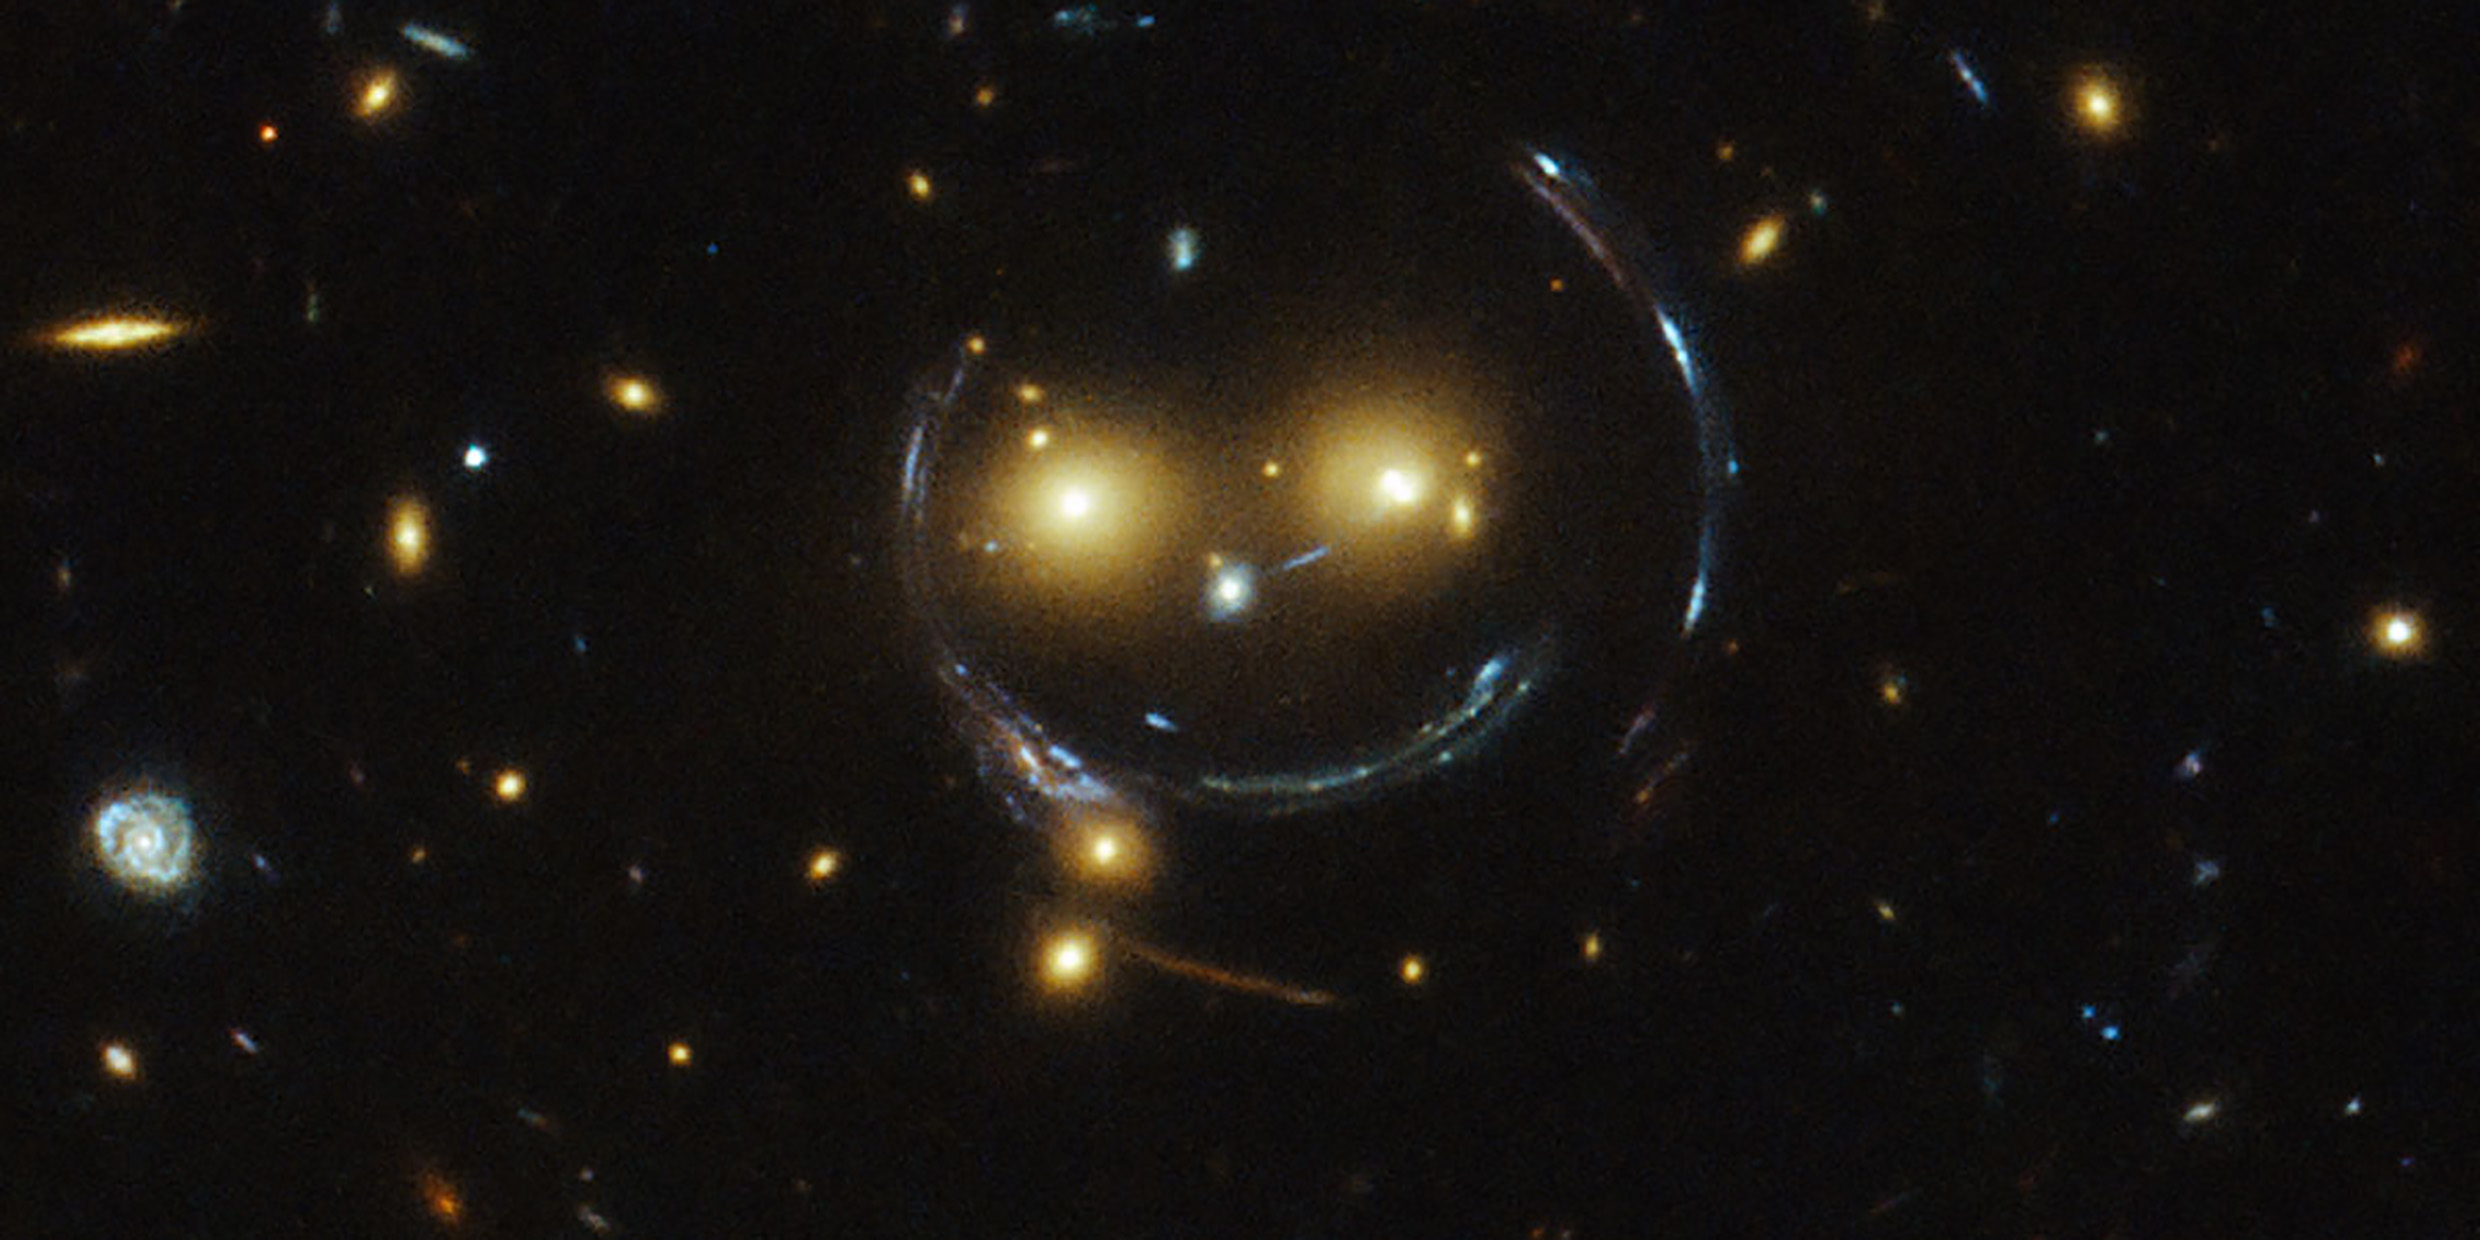 Image of a gravitational lens